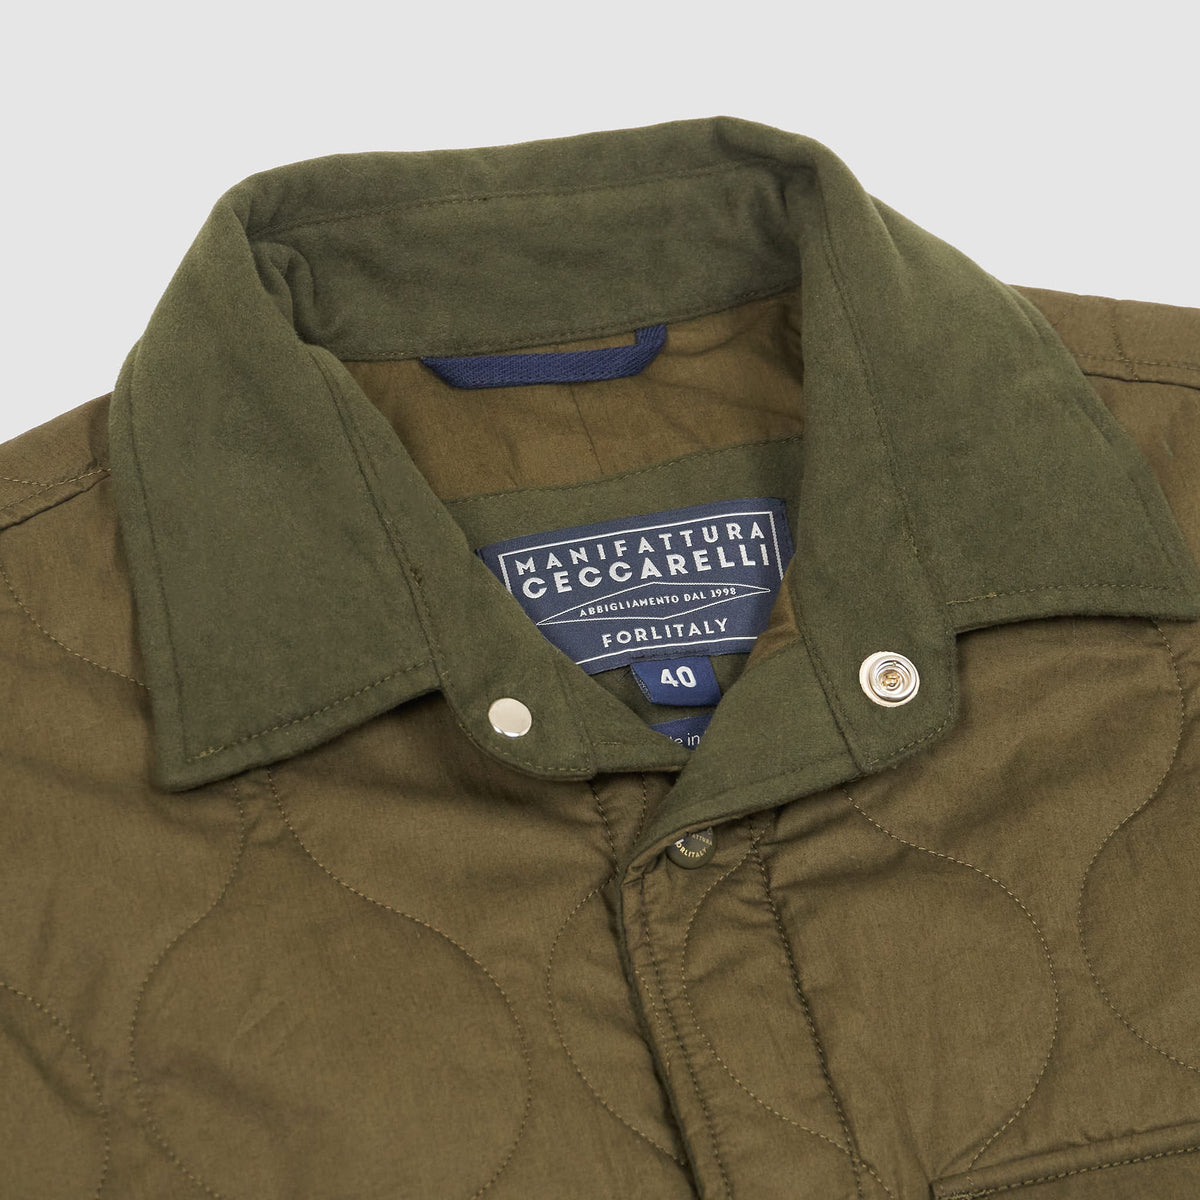 Manifattura Ceccarelli Quilted Overshirt jacket